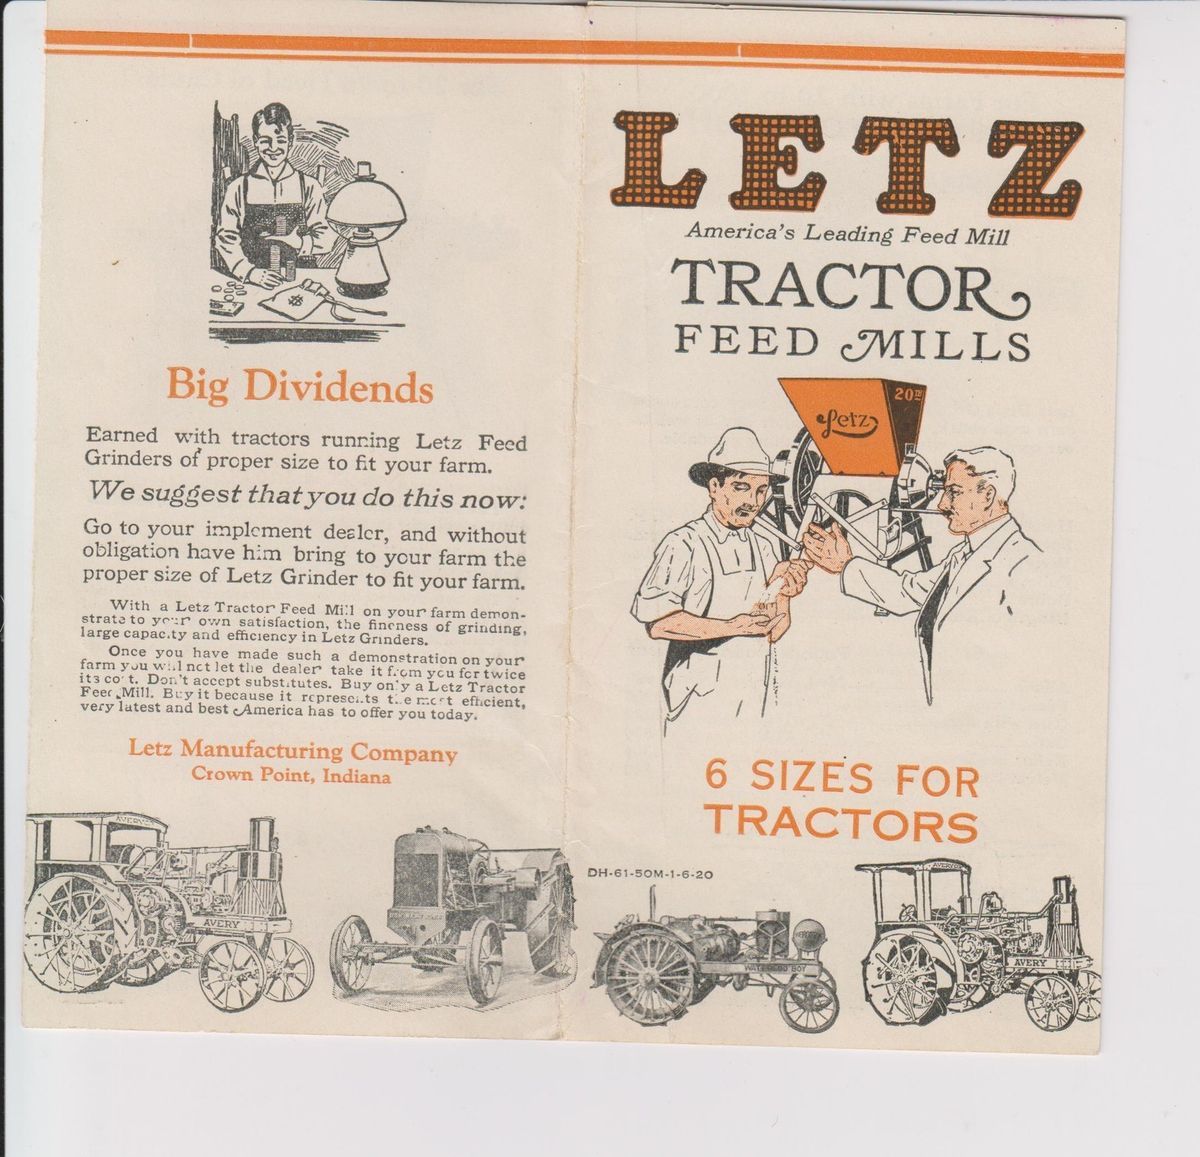   Feed Mills 1920 Cletrac Rock Island Plow Avery Tractor Brochure